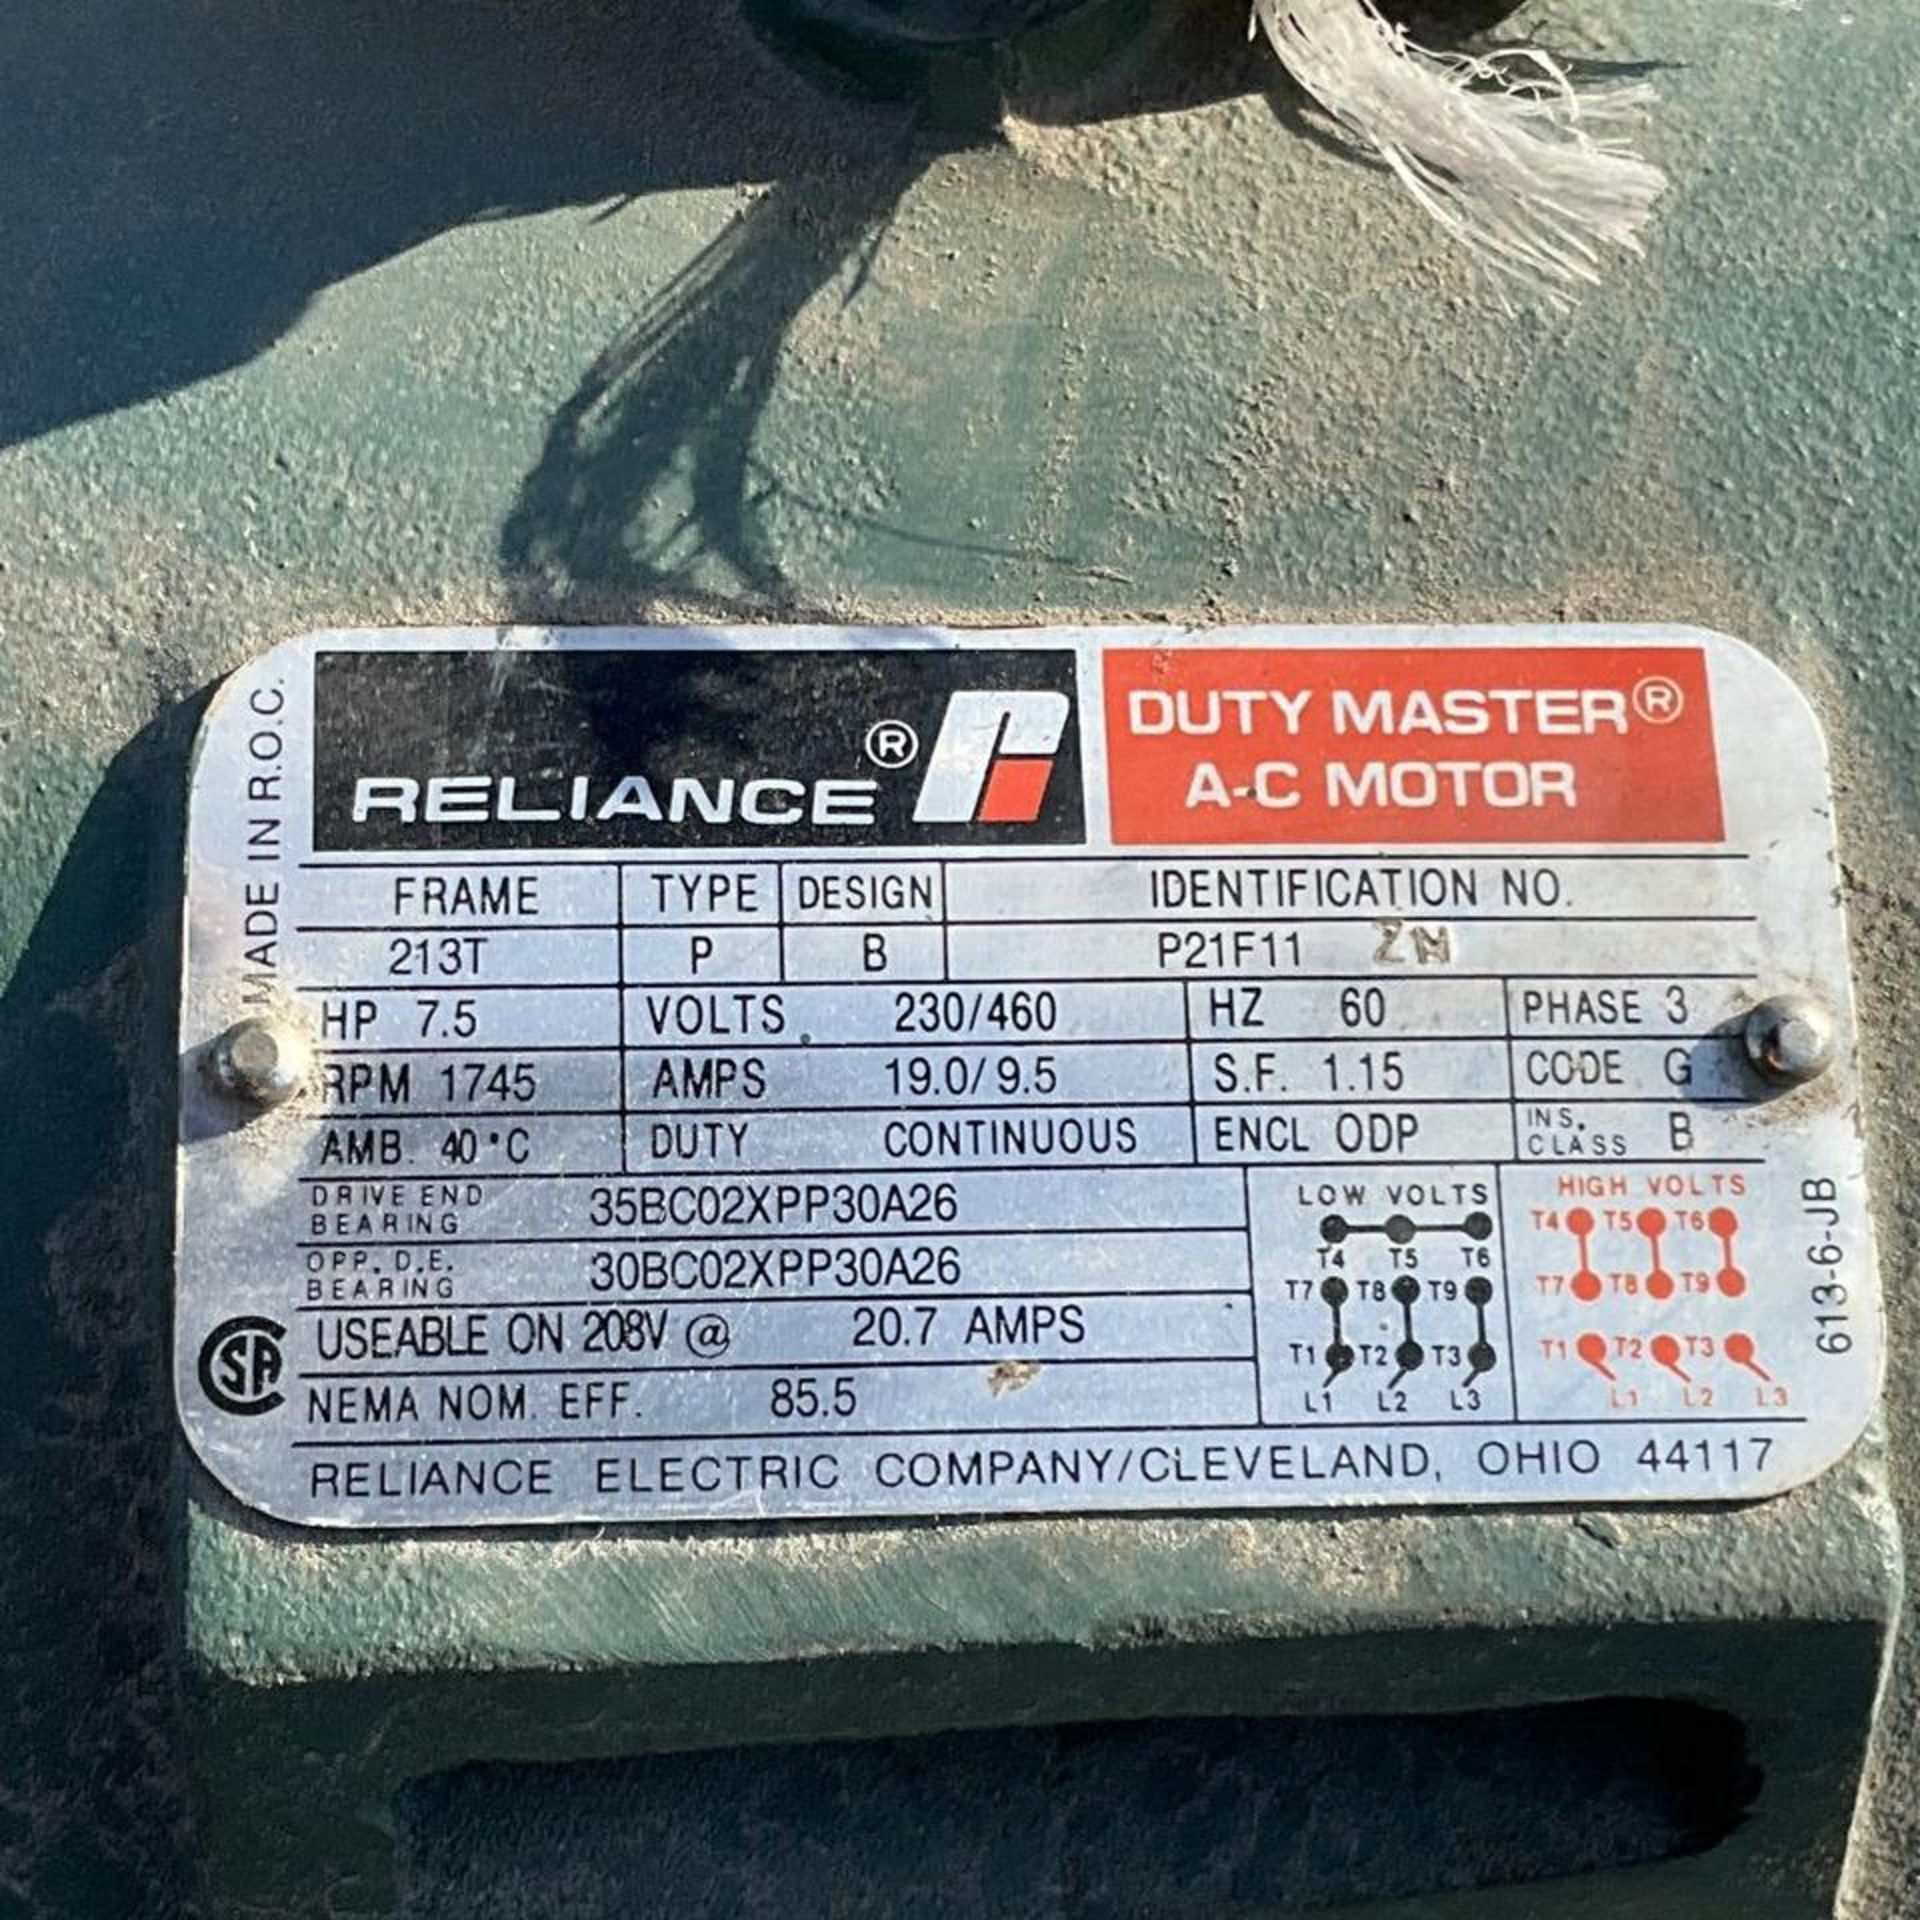 RELIANCE P21F11 DUTY MASTER AC MOTOR 7.5 HP 230/460V 19/9.5 A 1745 RPM 60HZ 3 PH - Image 6 of 9